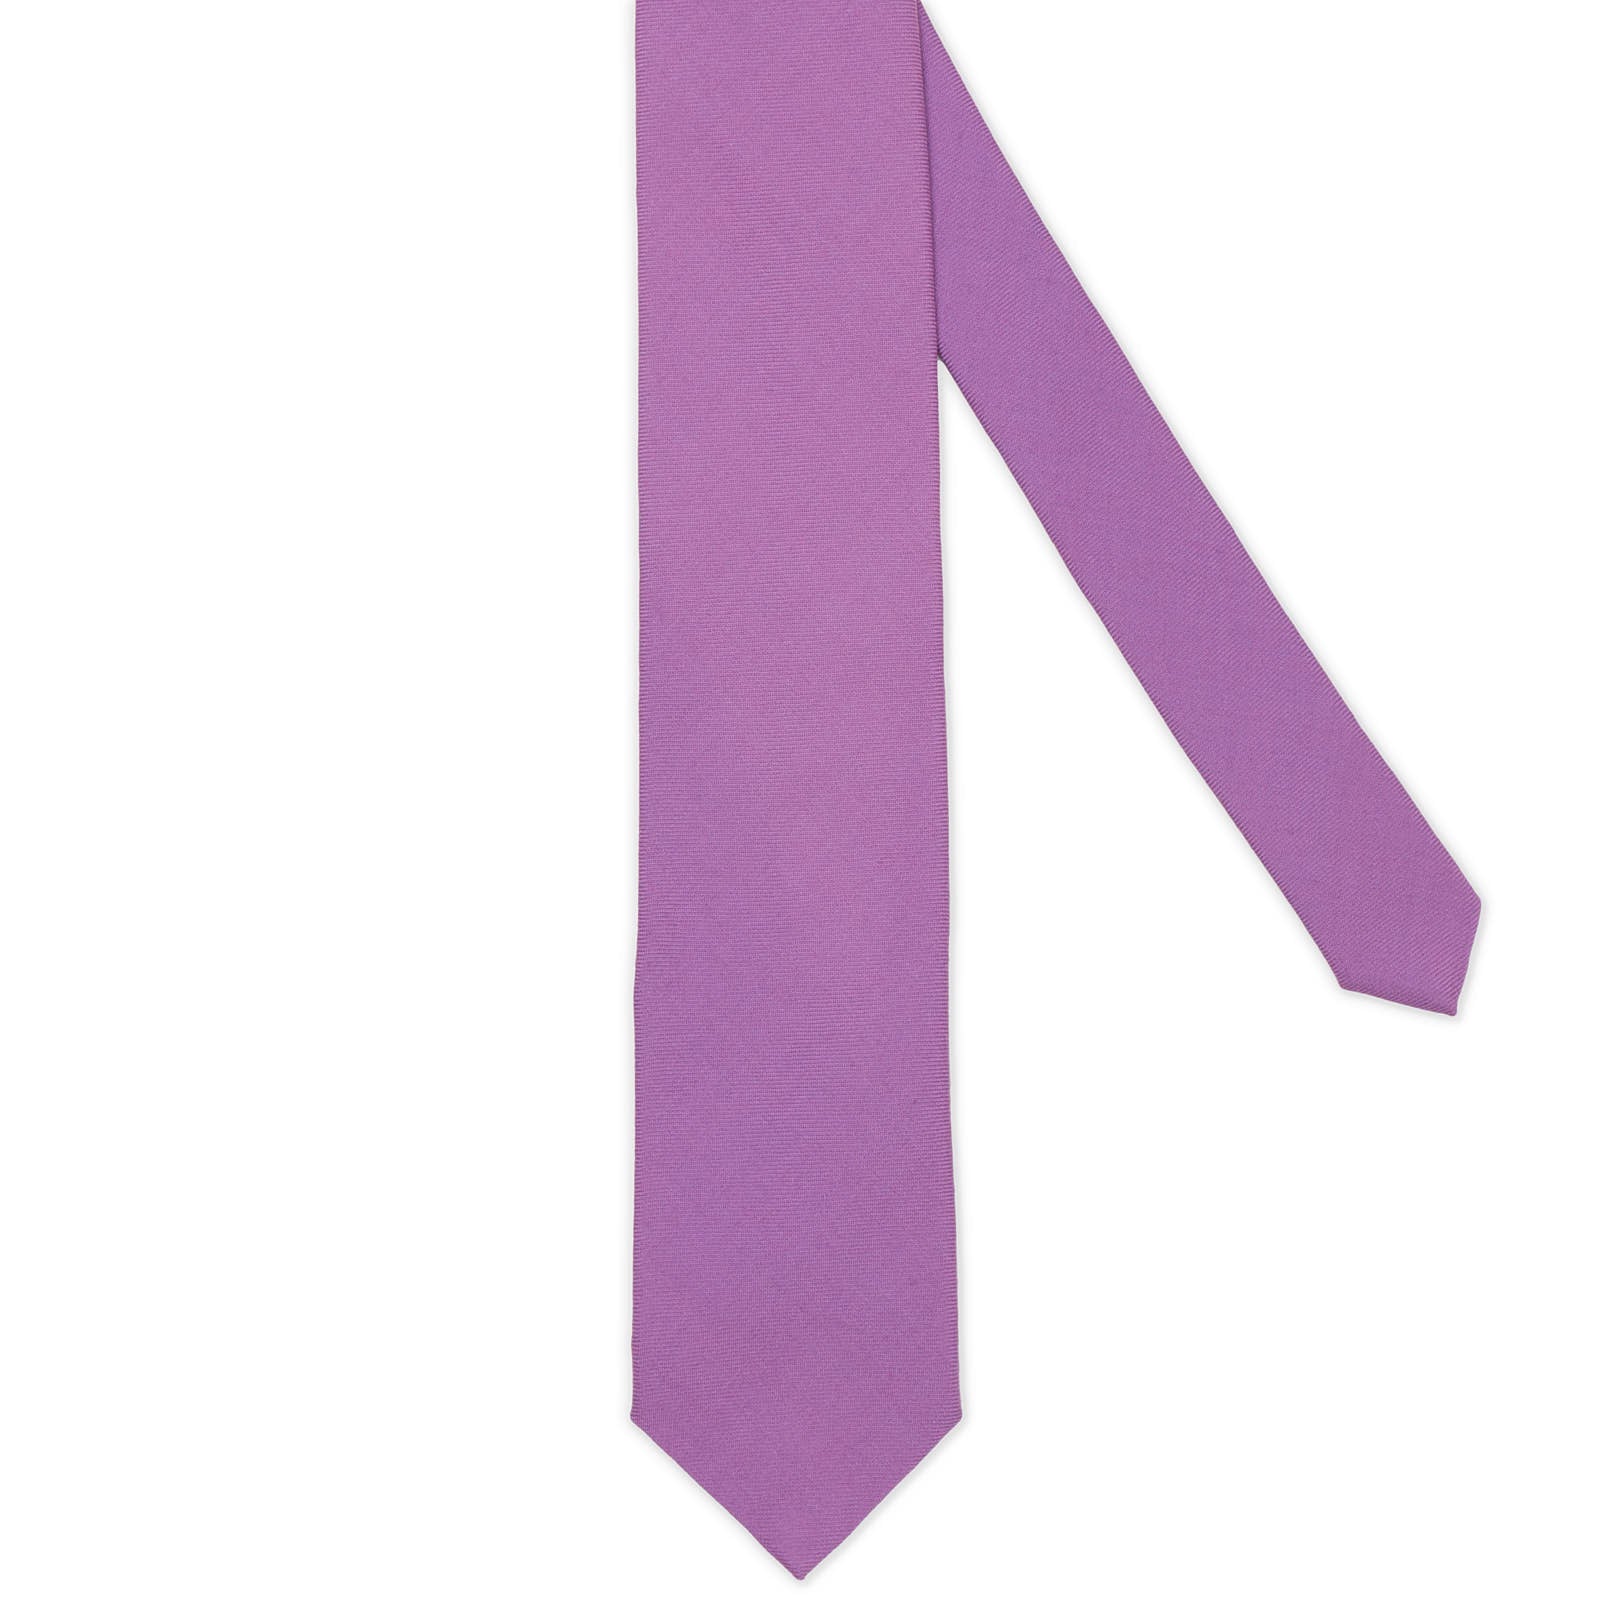 G BY MATTIA Purple Wool Tie NEW